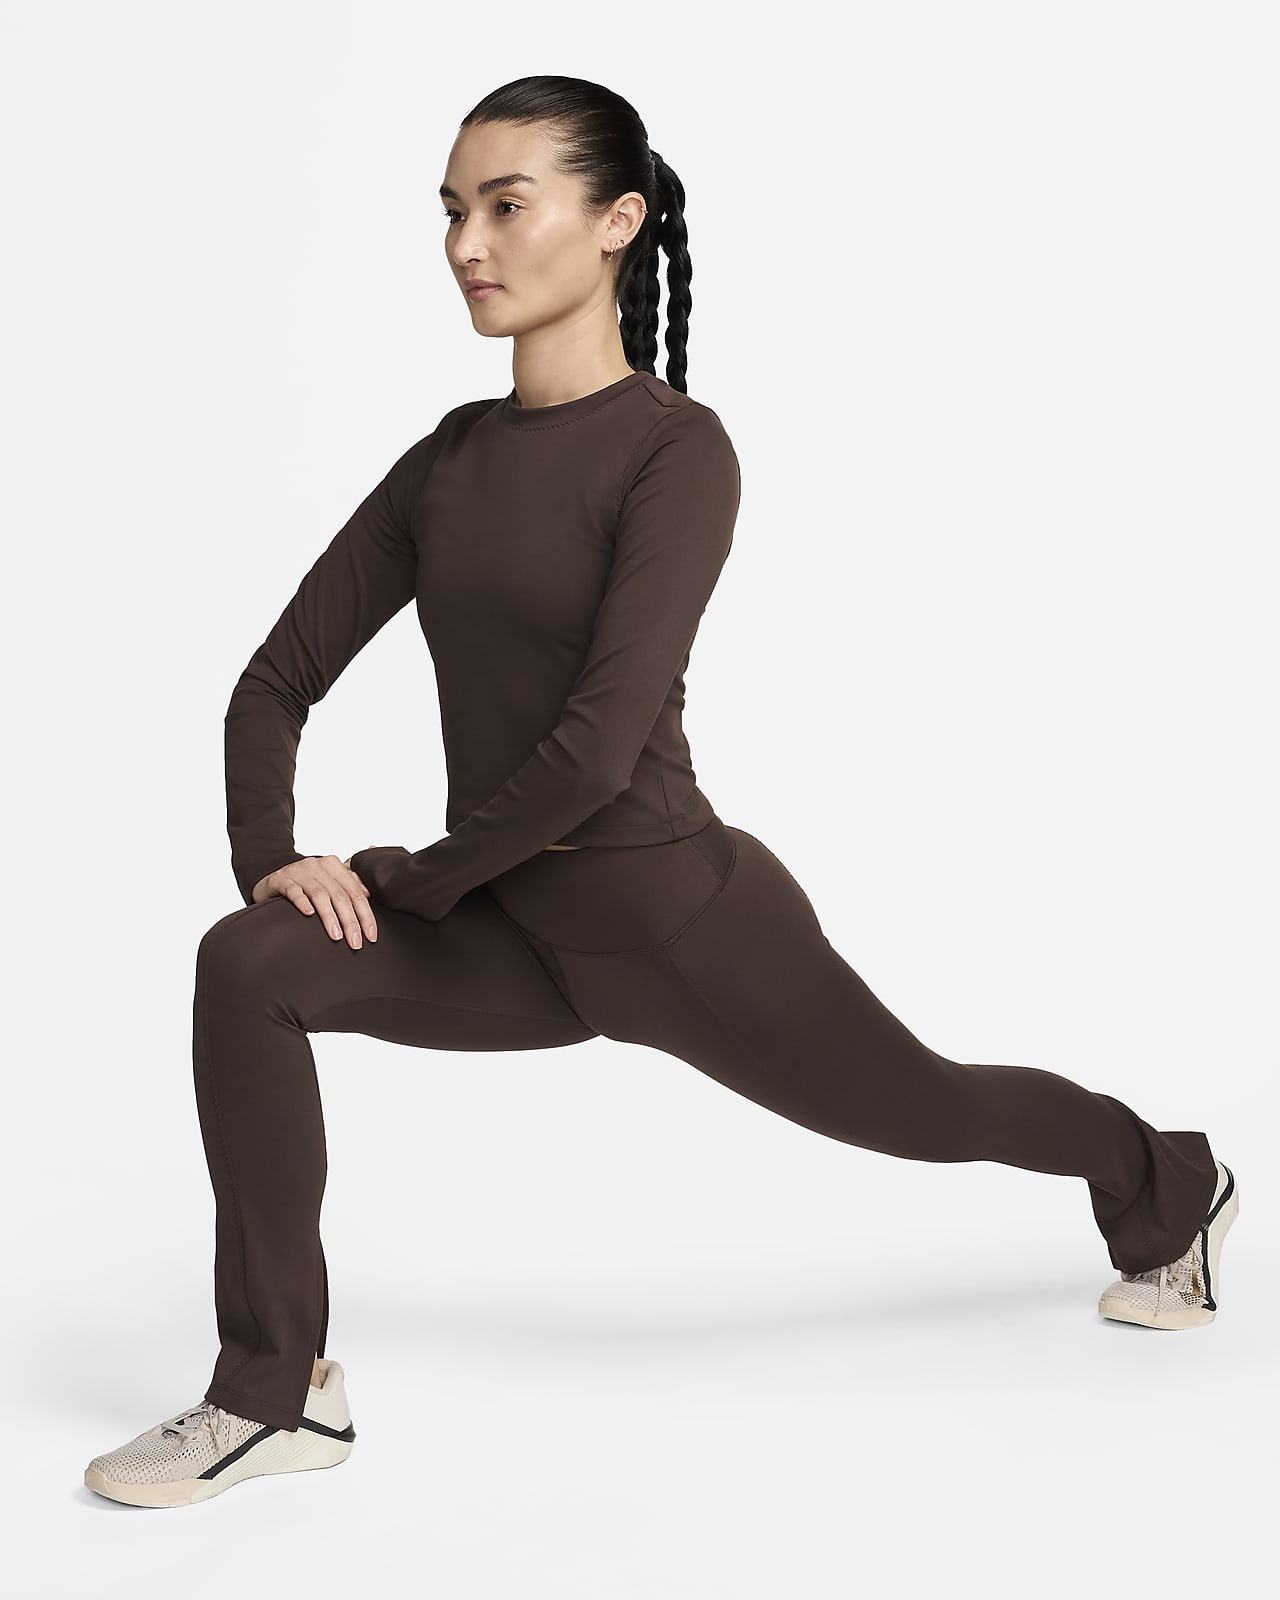 Women's high-waisted leggings Nike One - Baselayers - Textile